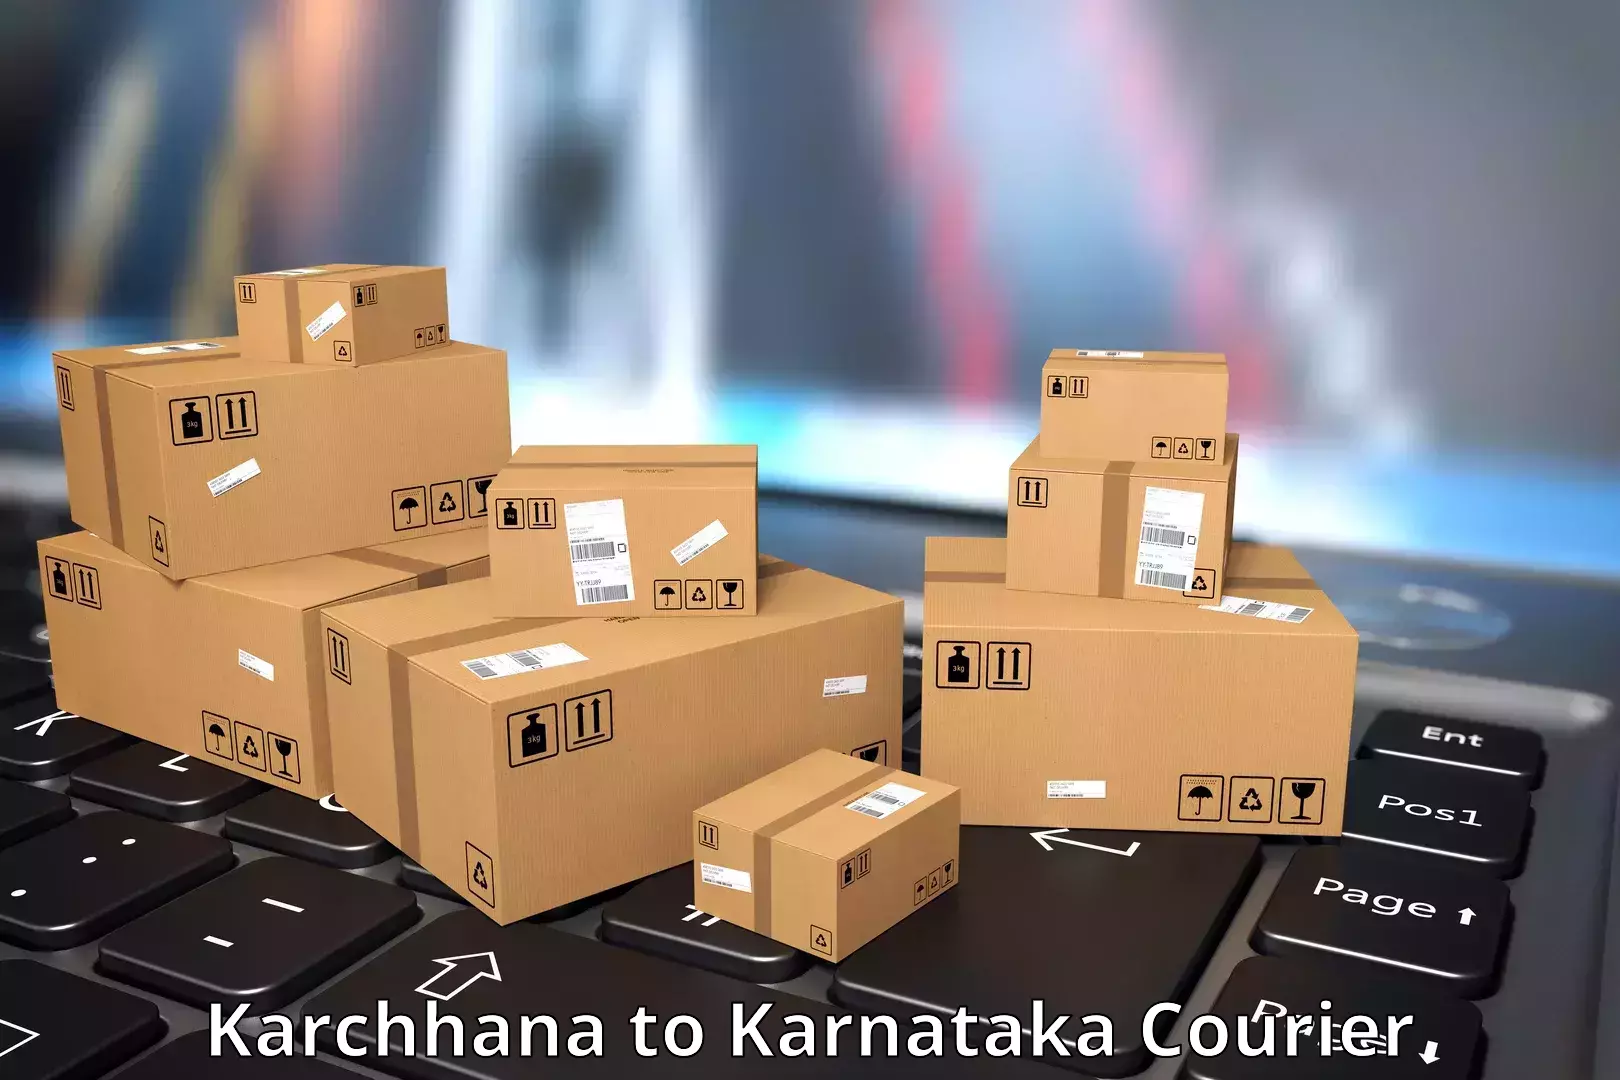 Specialized shipment handling Karchhana to Gundlupete